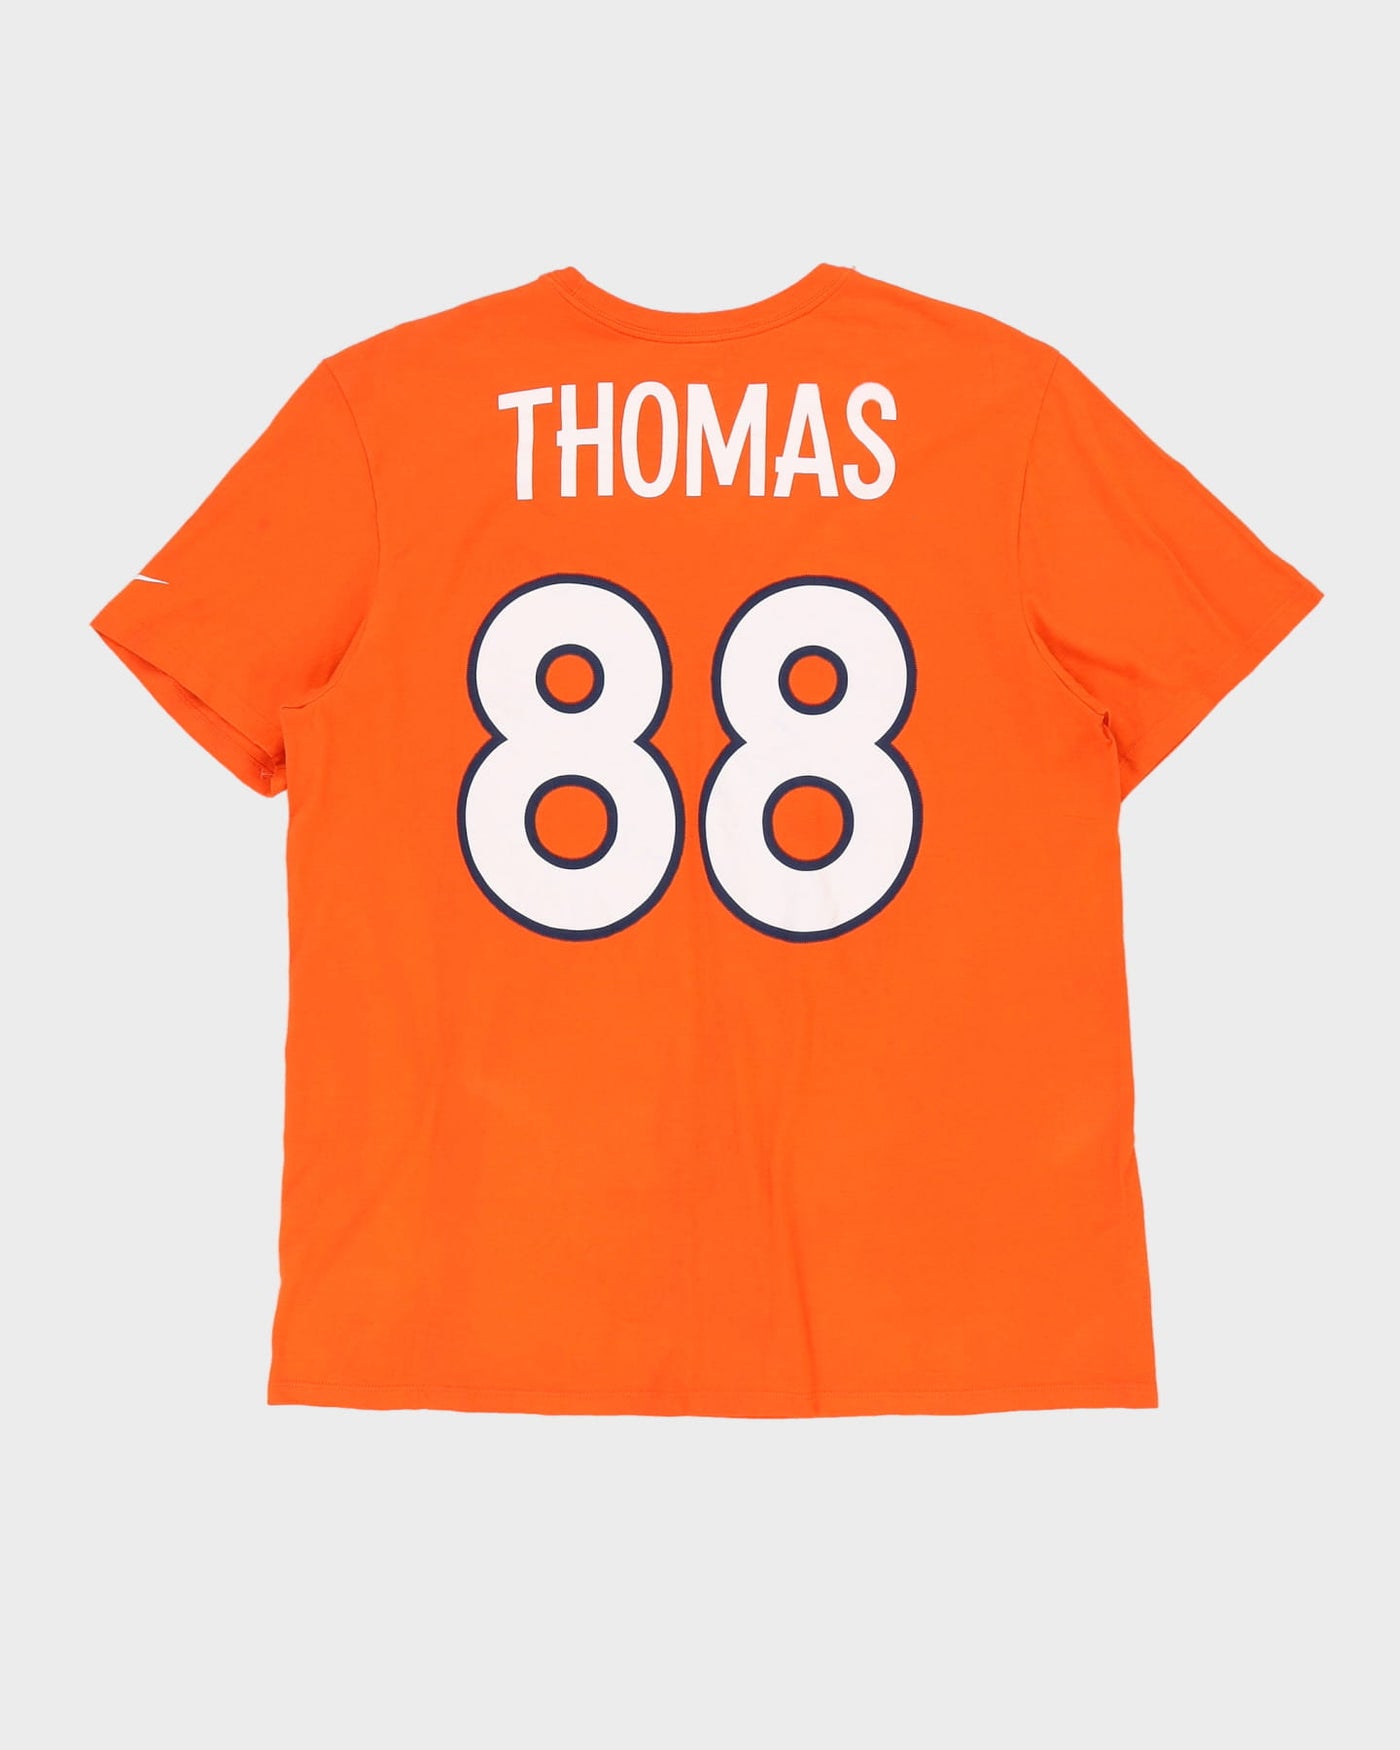 Demaryius Thomas #88 Jersey Style Orange Graphic T-Shirt - XL